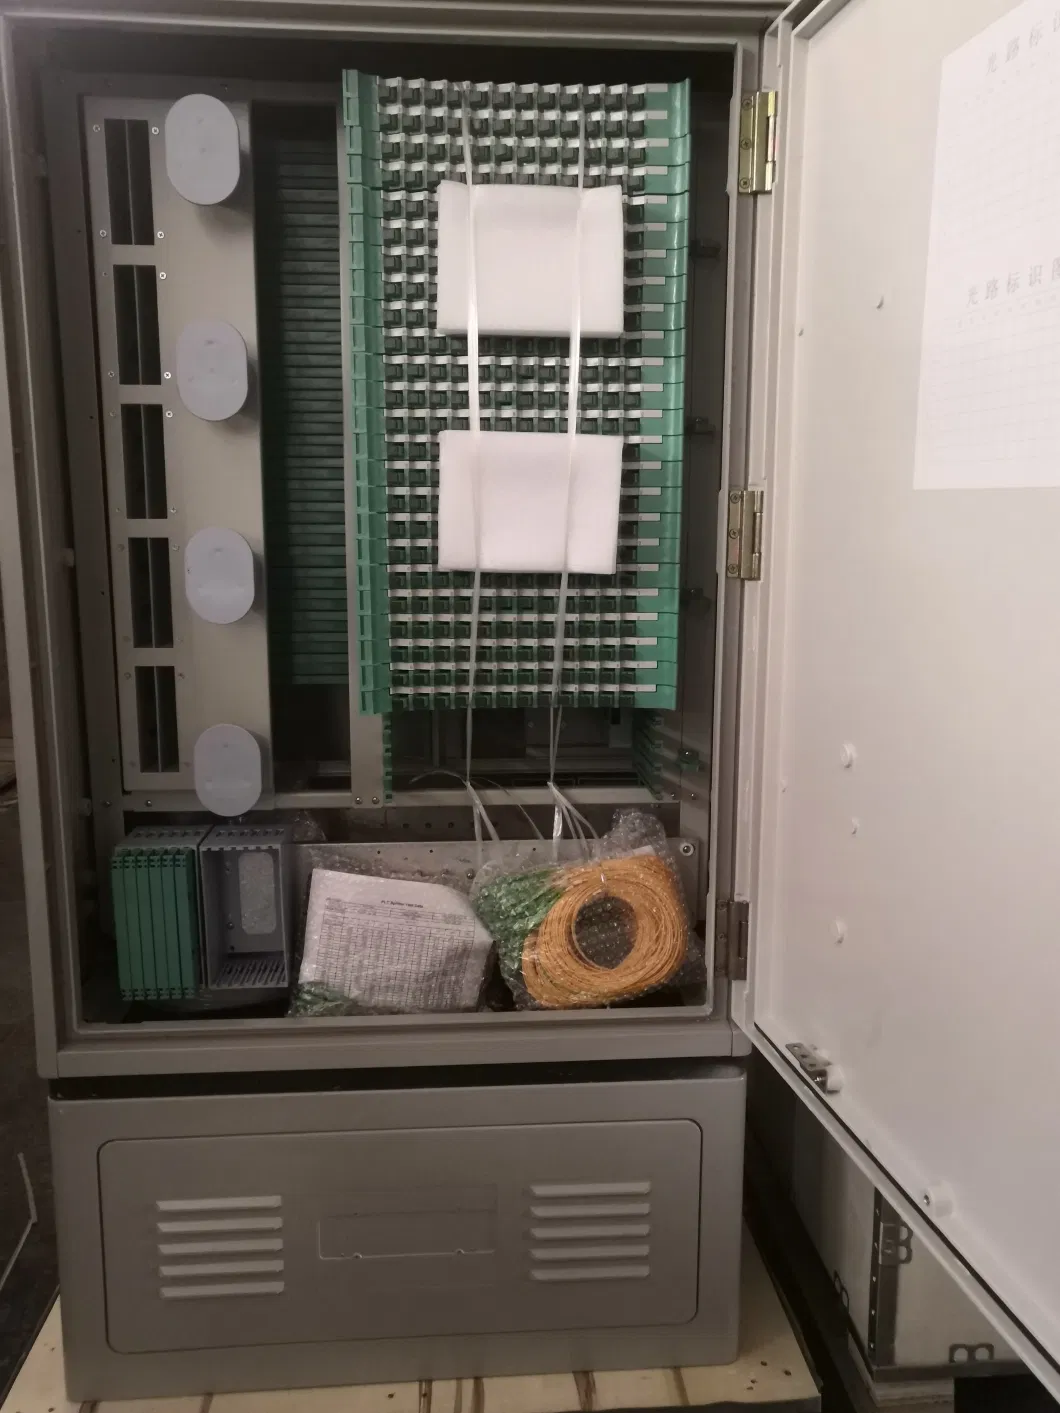 SMC Material Cross Connection Transfer Box Fiber Distribution Cabinet